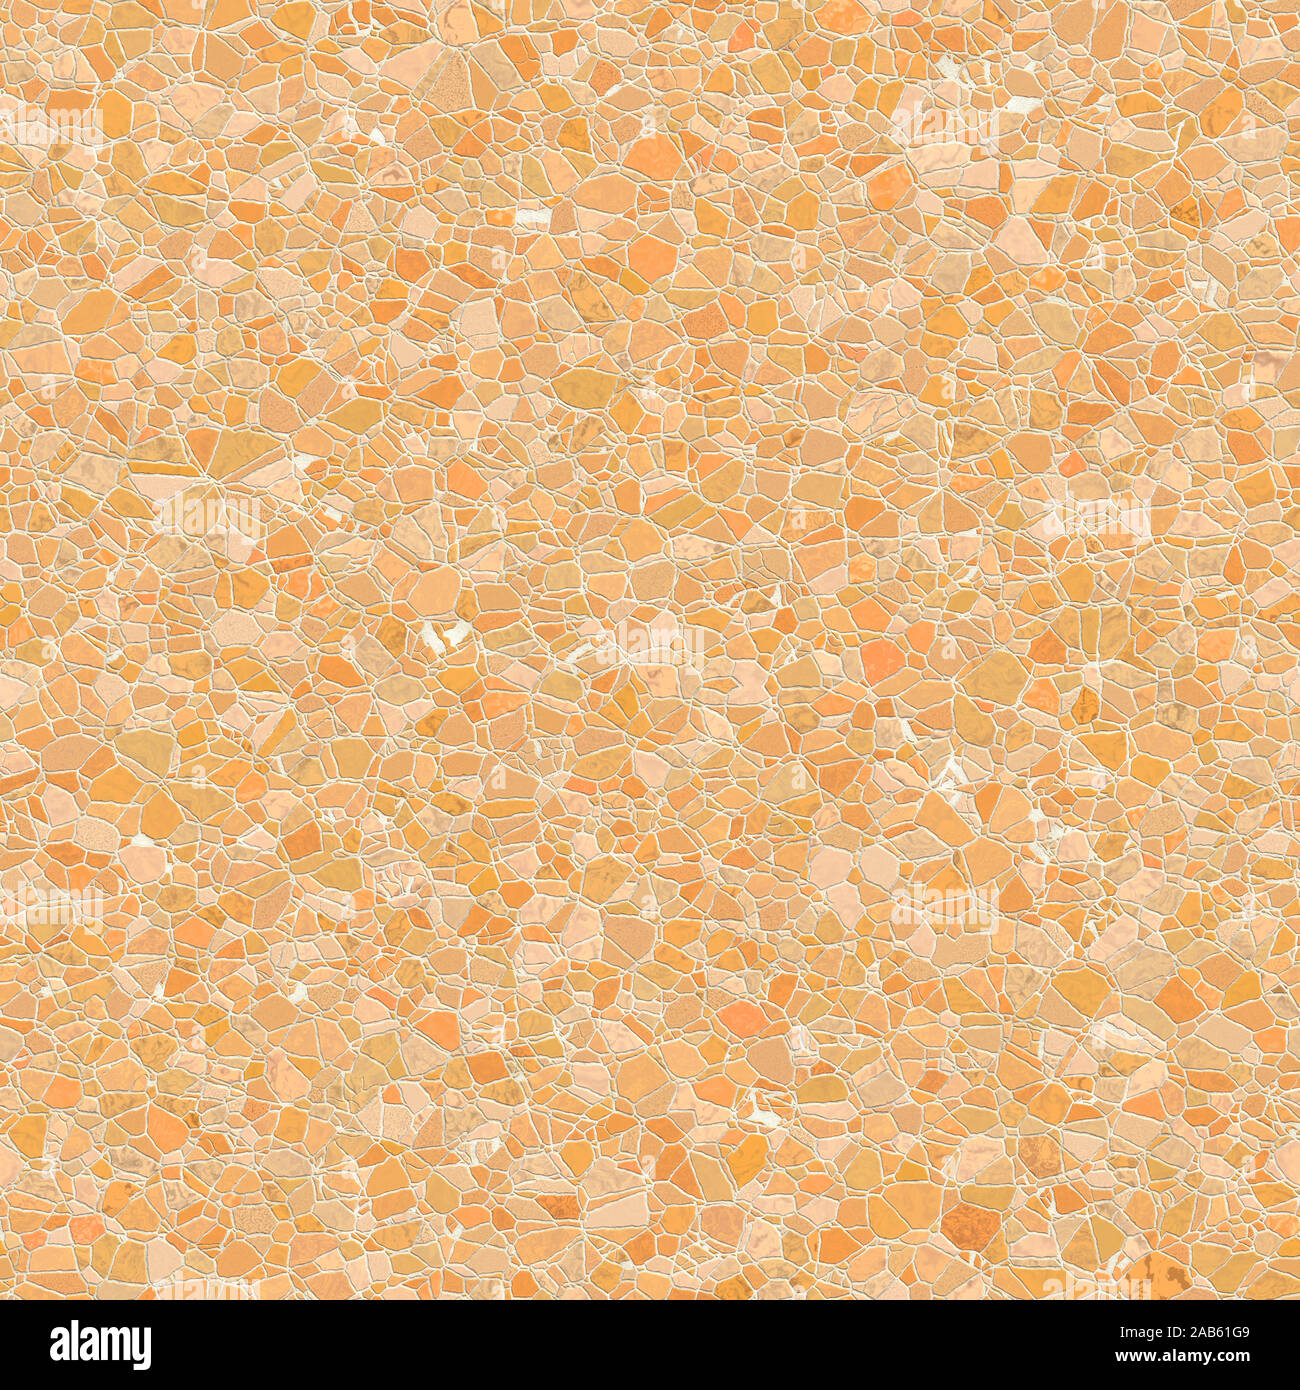 An illustration of a nice seamless tiles texture Stock Photo